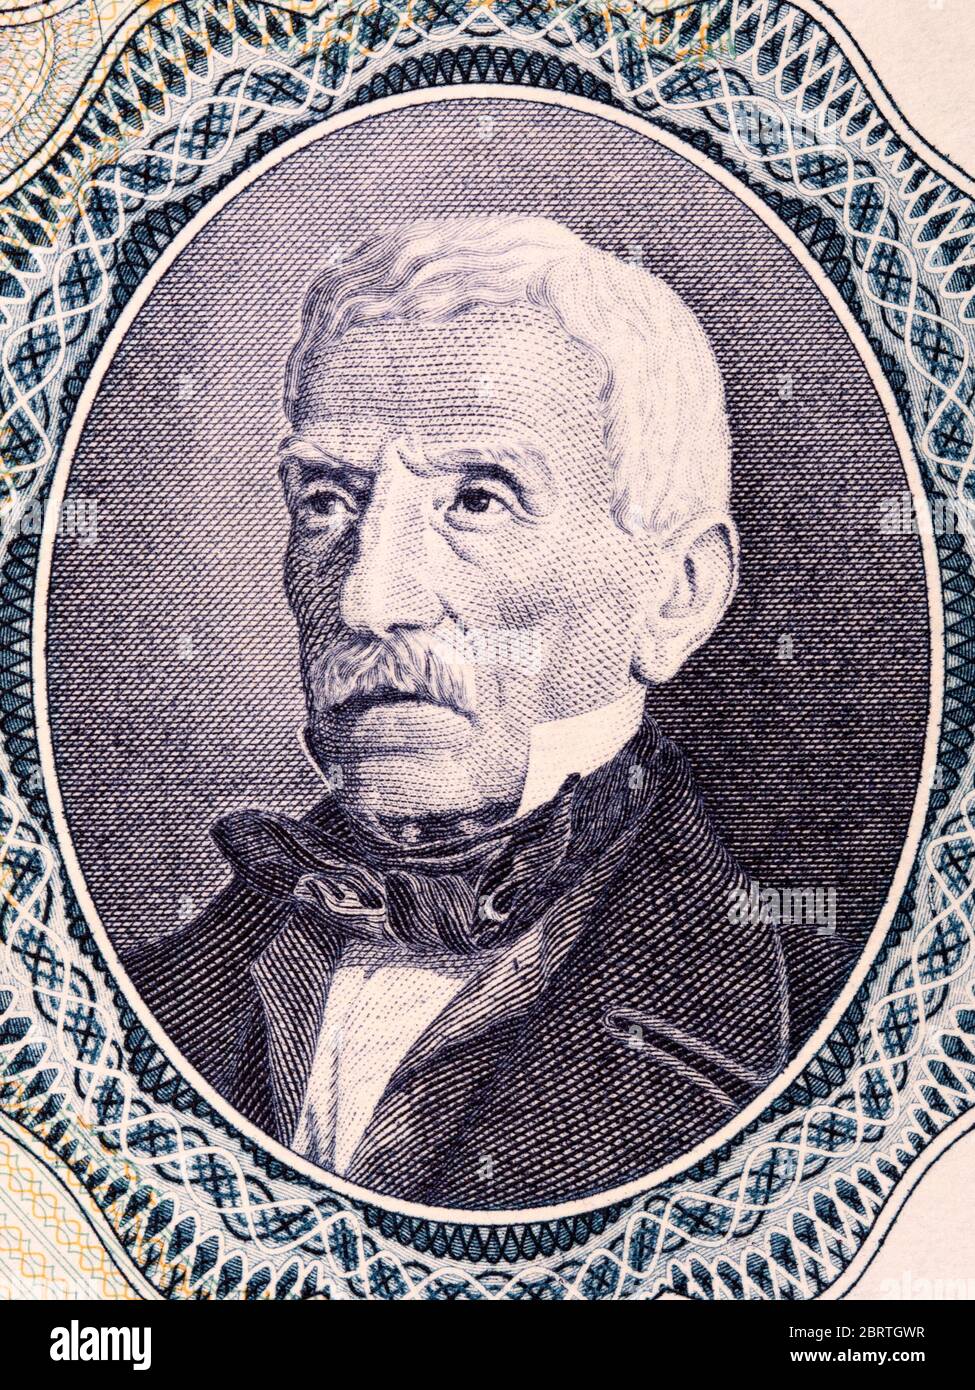 Jose Francisco de San Martin y Matorras a portrait from old Argentine money Stock Photo